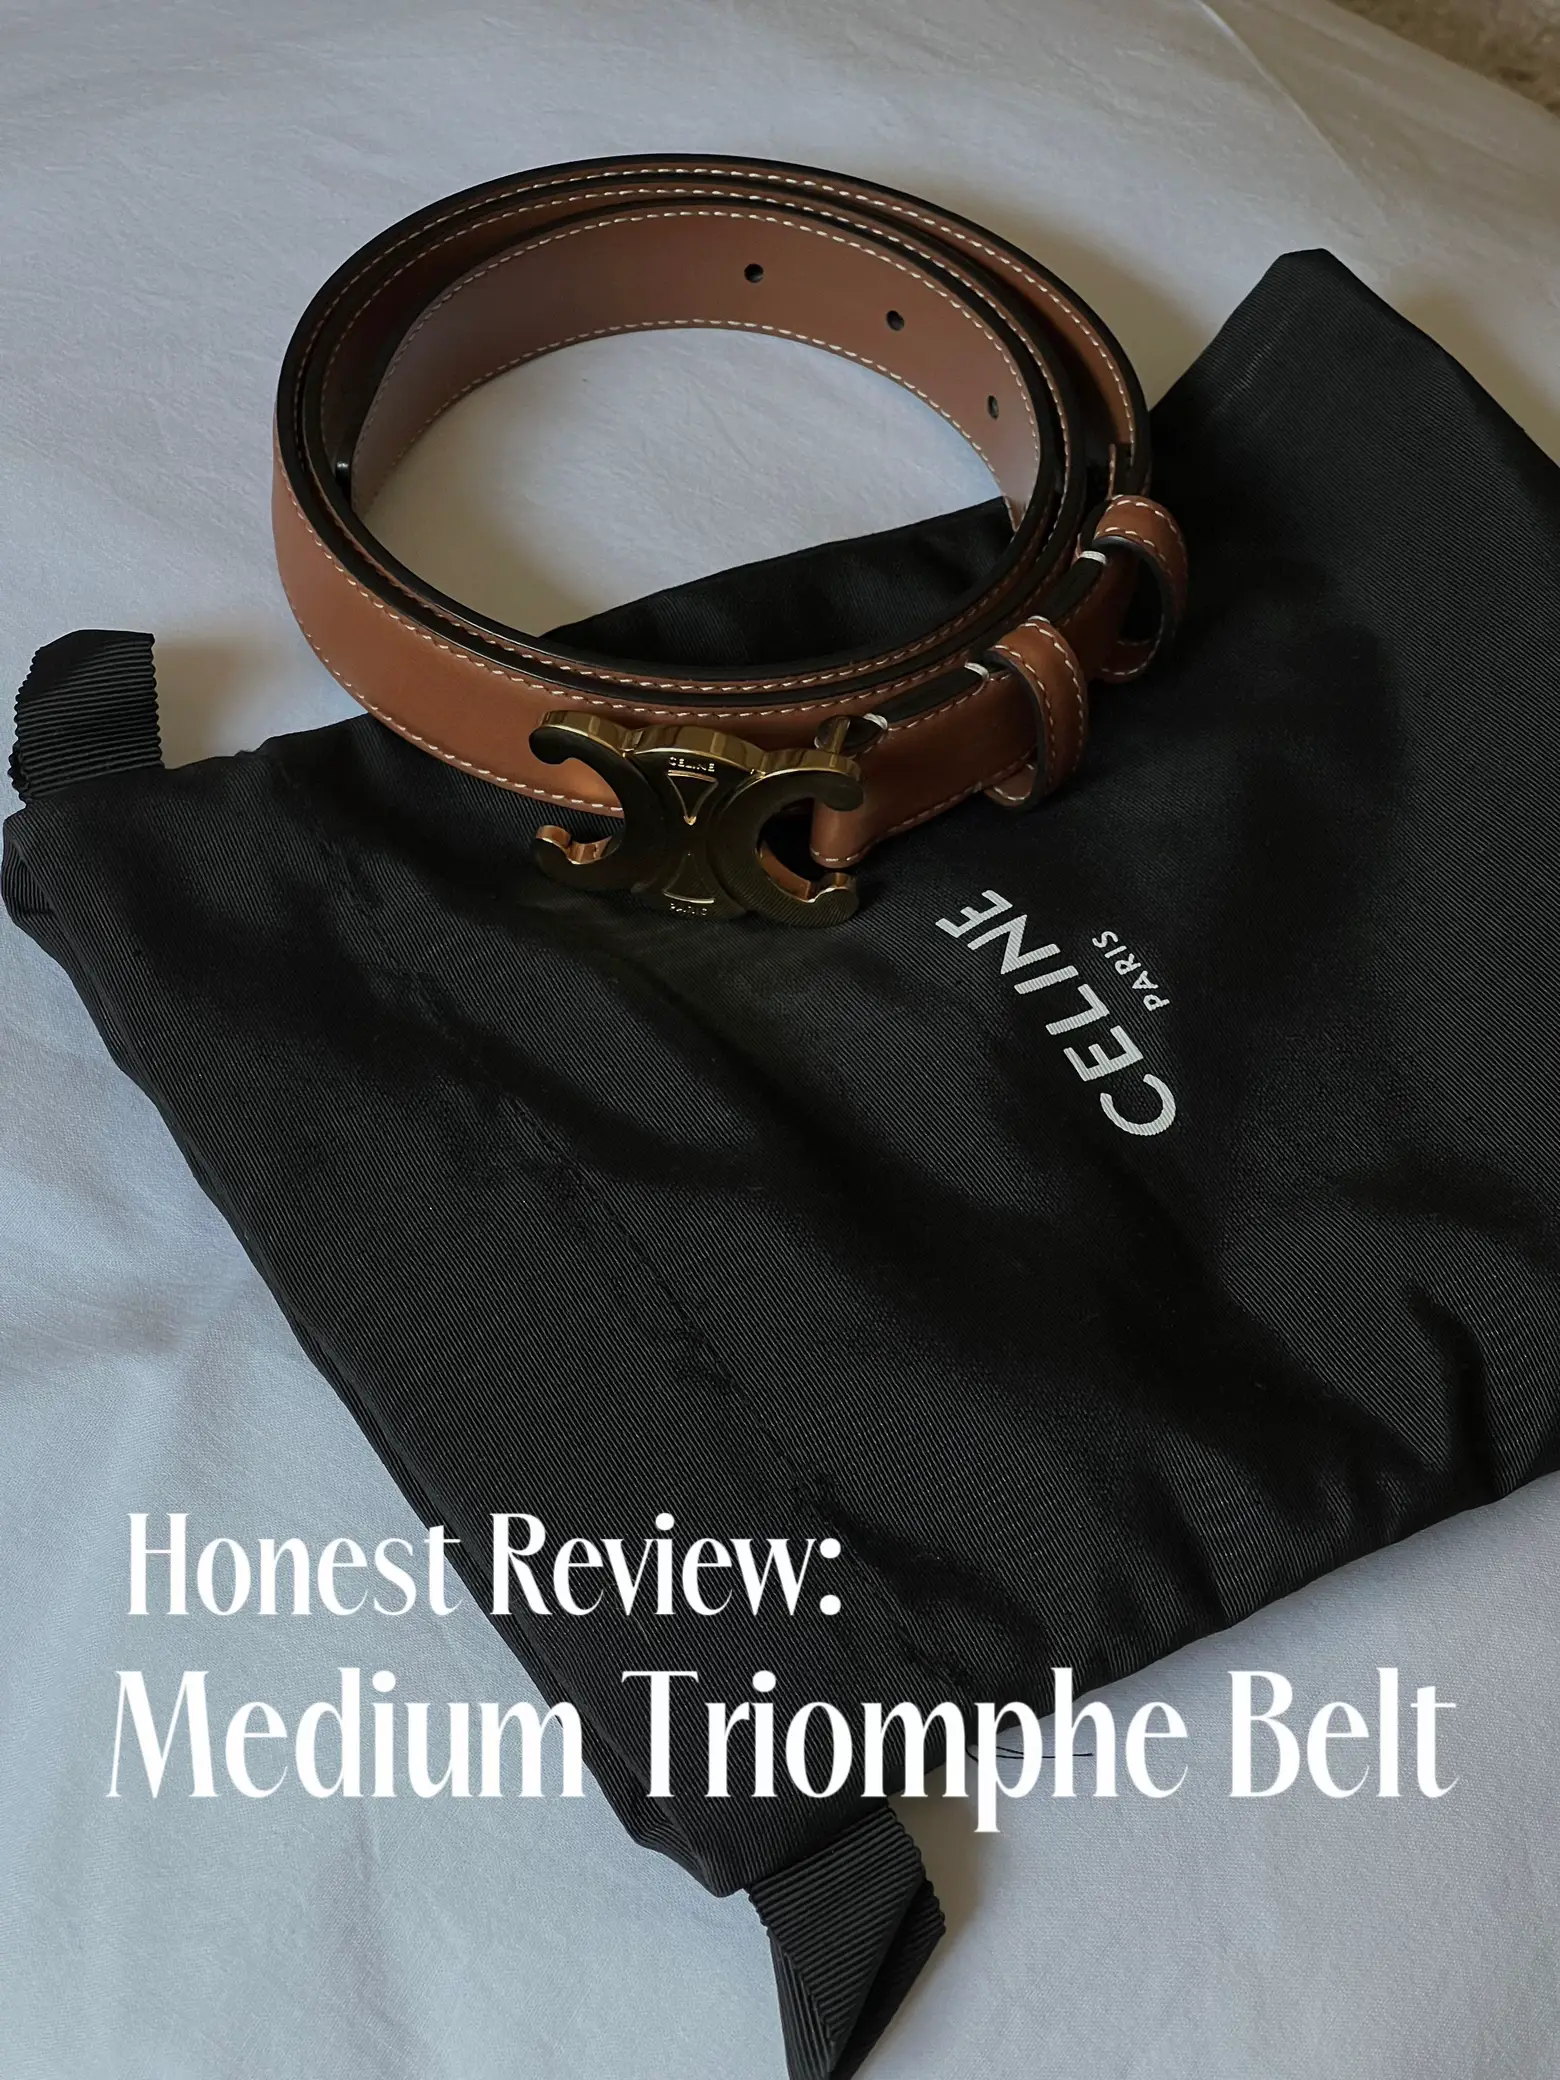 Celine Triomphe Medium Belt, Gallery posted by Sbb_Brandname